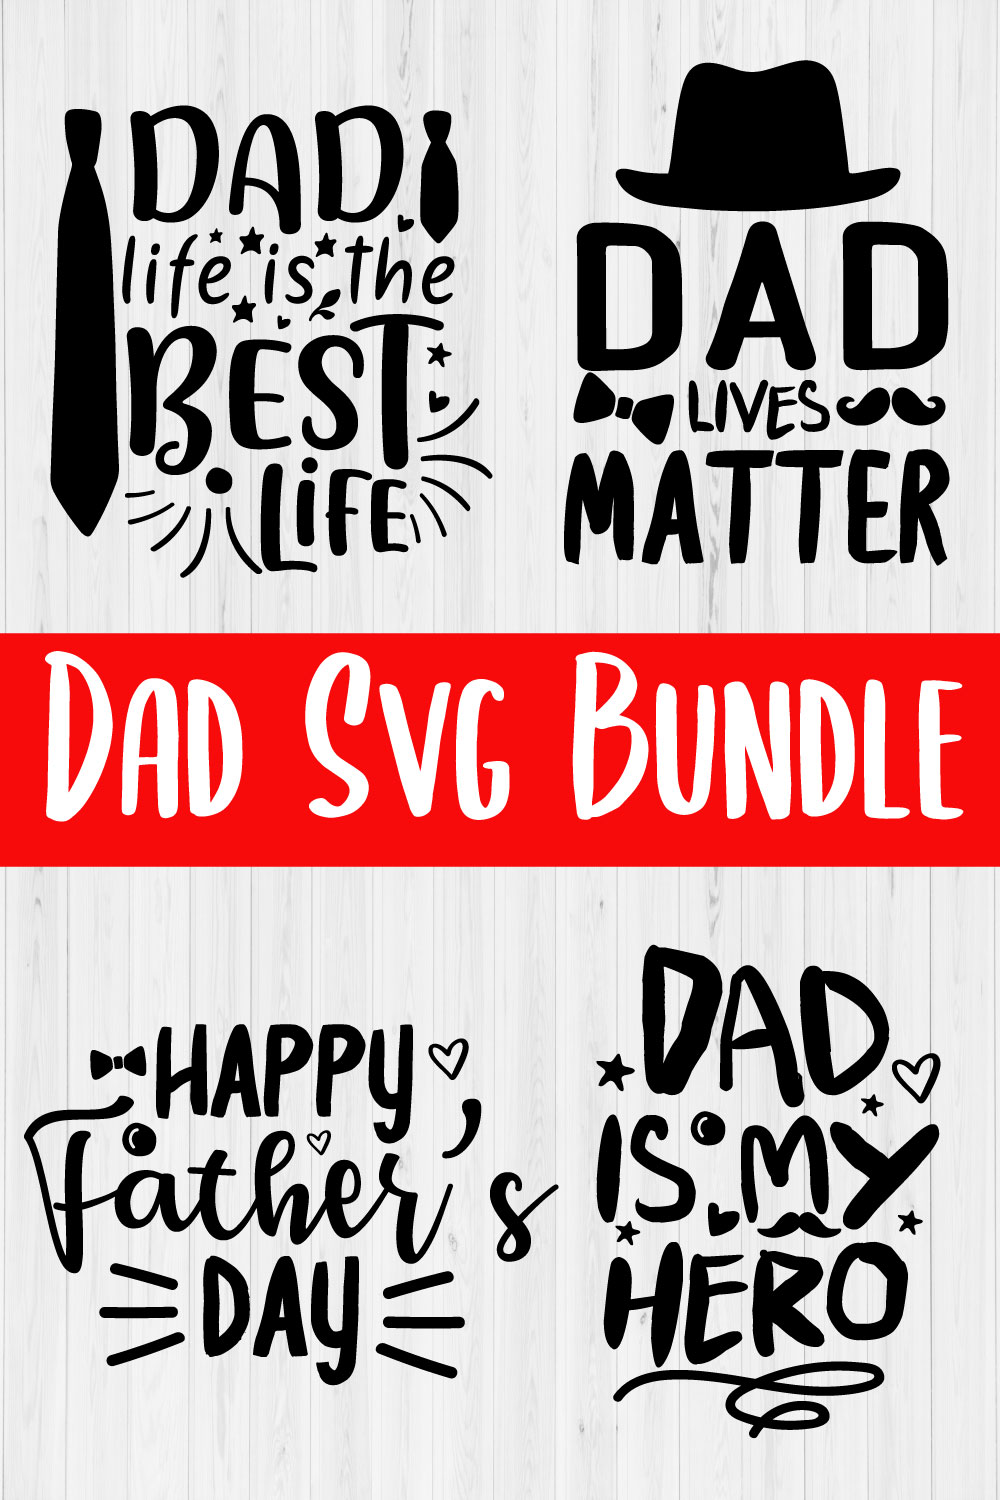 Dad Svg Bundle Vol3 pinterest preview image.